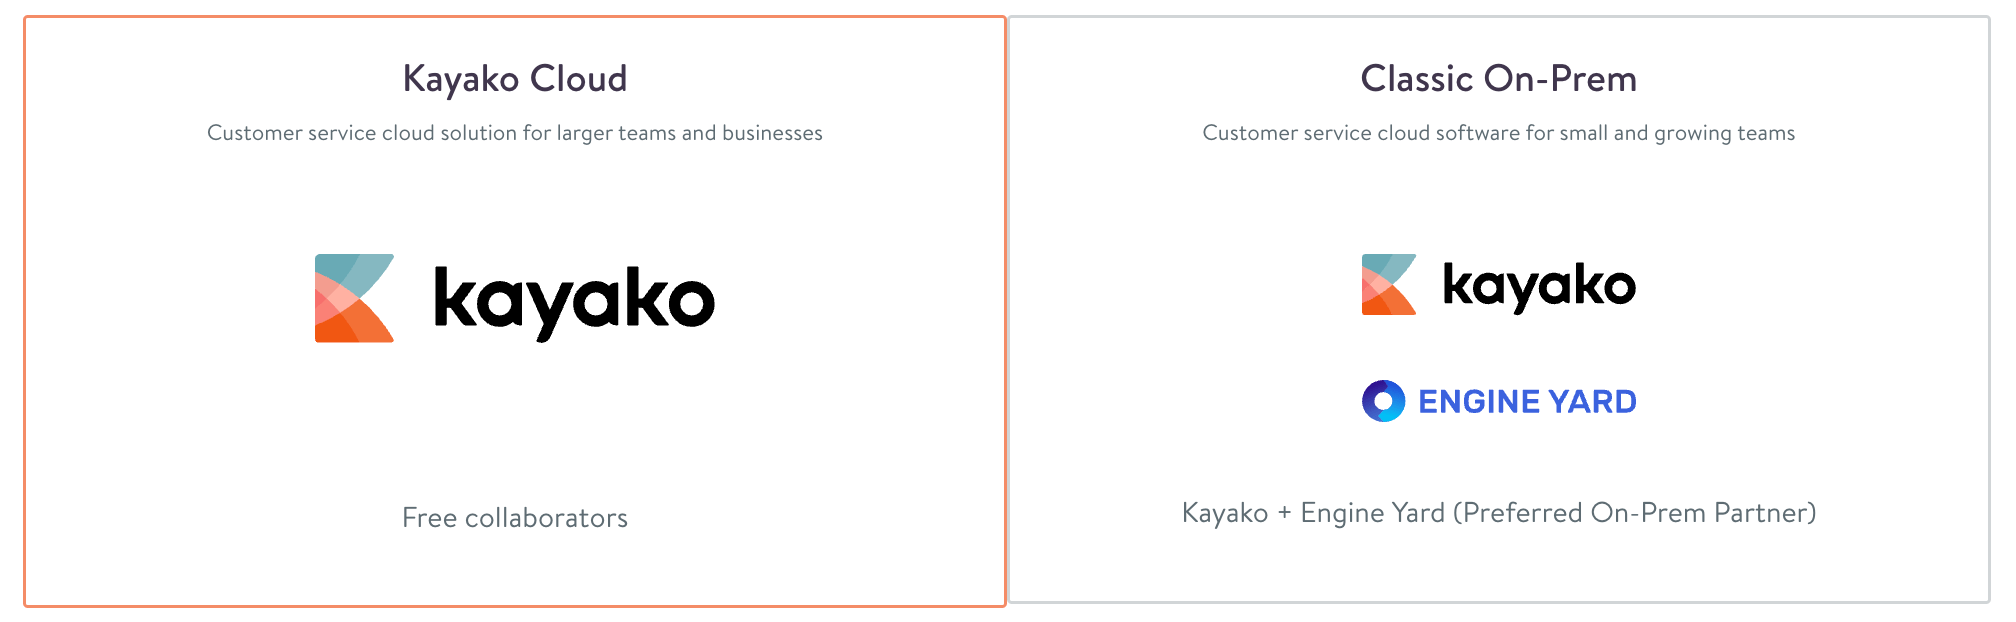 Kayako versions - cloud and on-premise